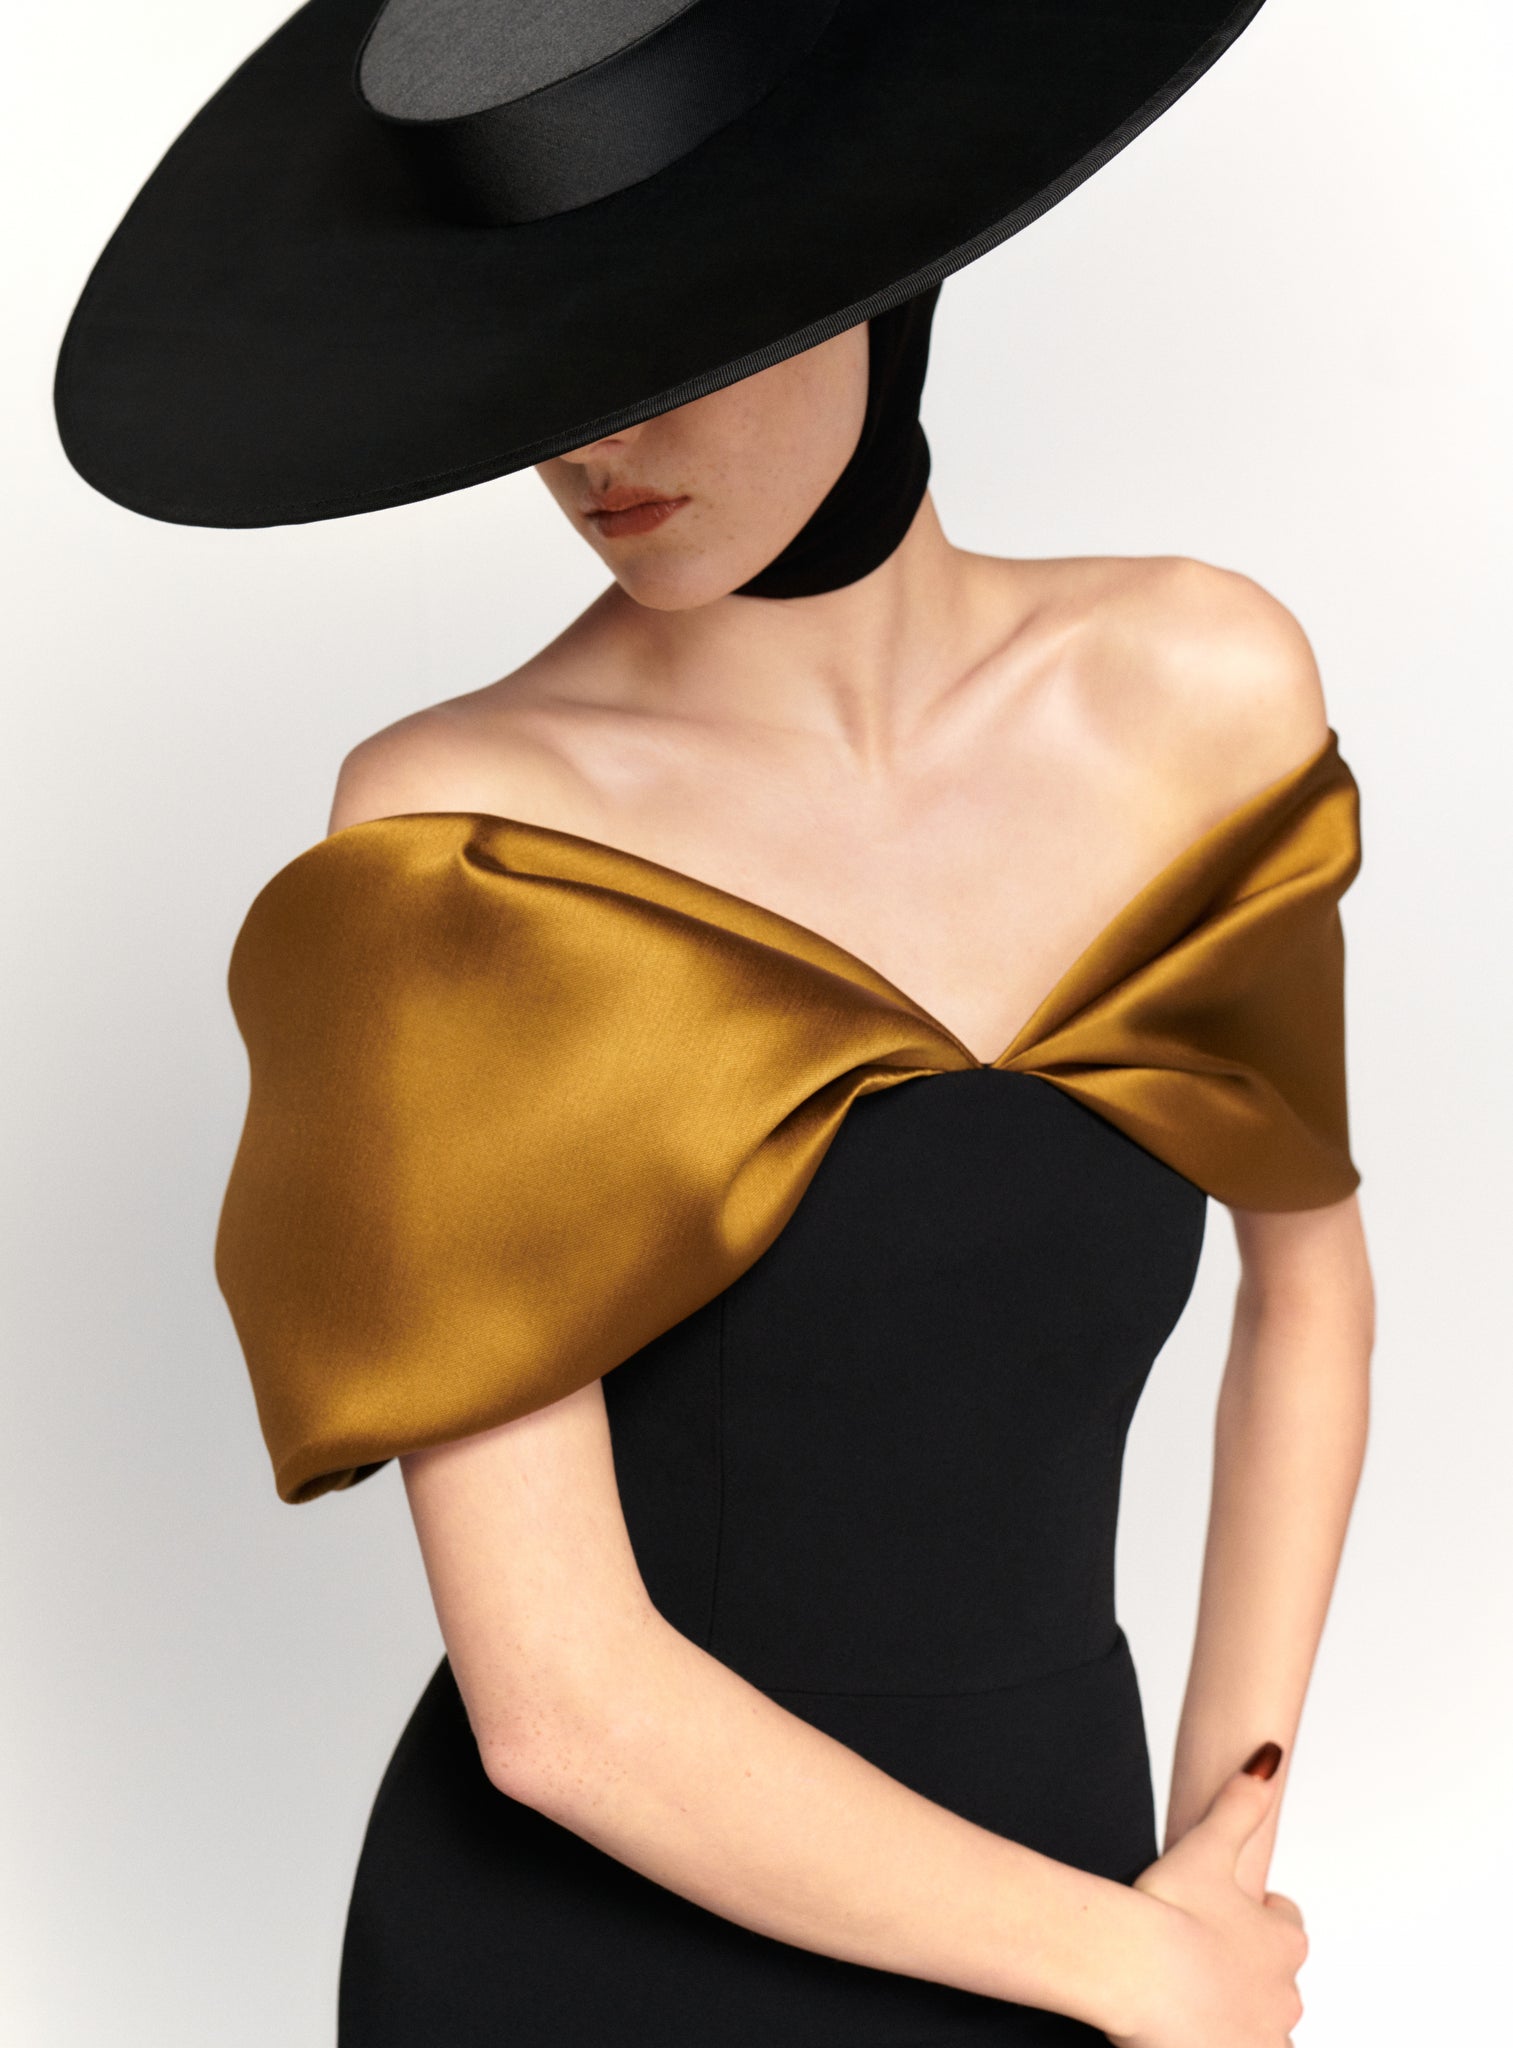 The Dakota Maxi Dress in Gold and Black